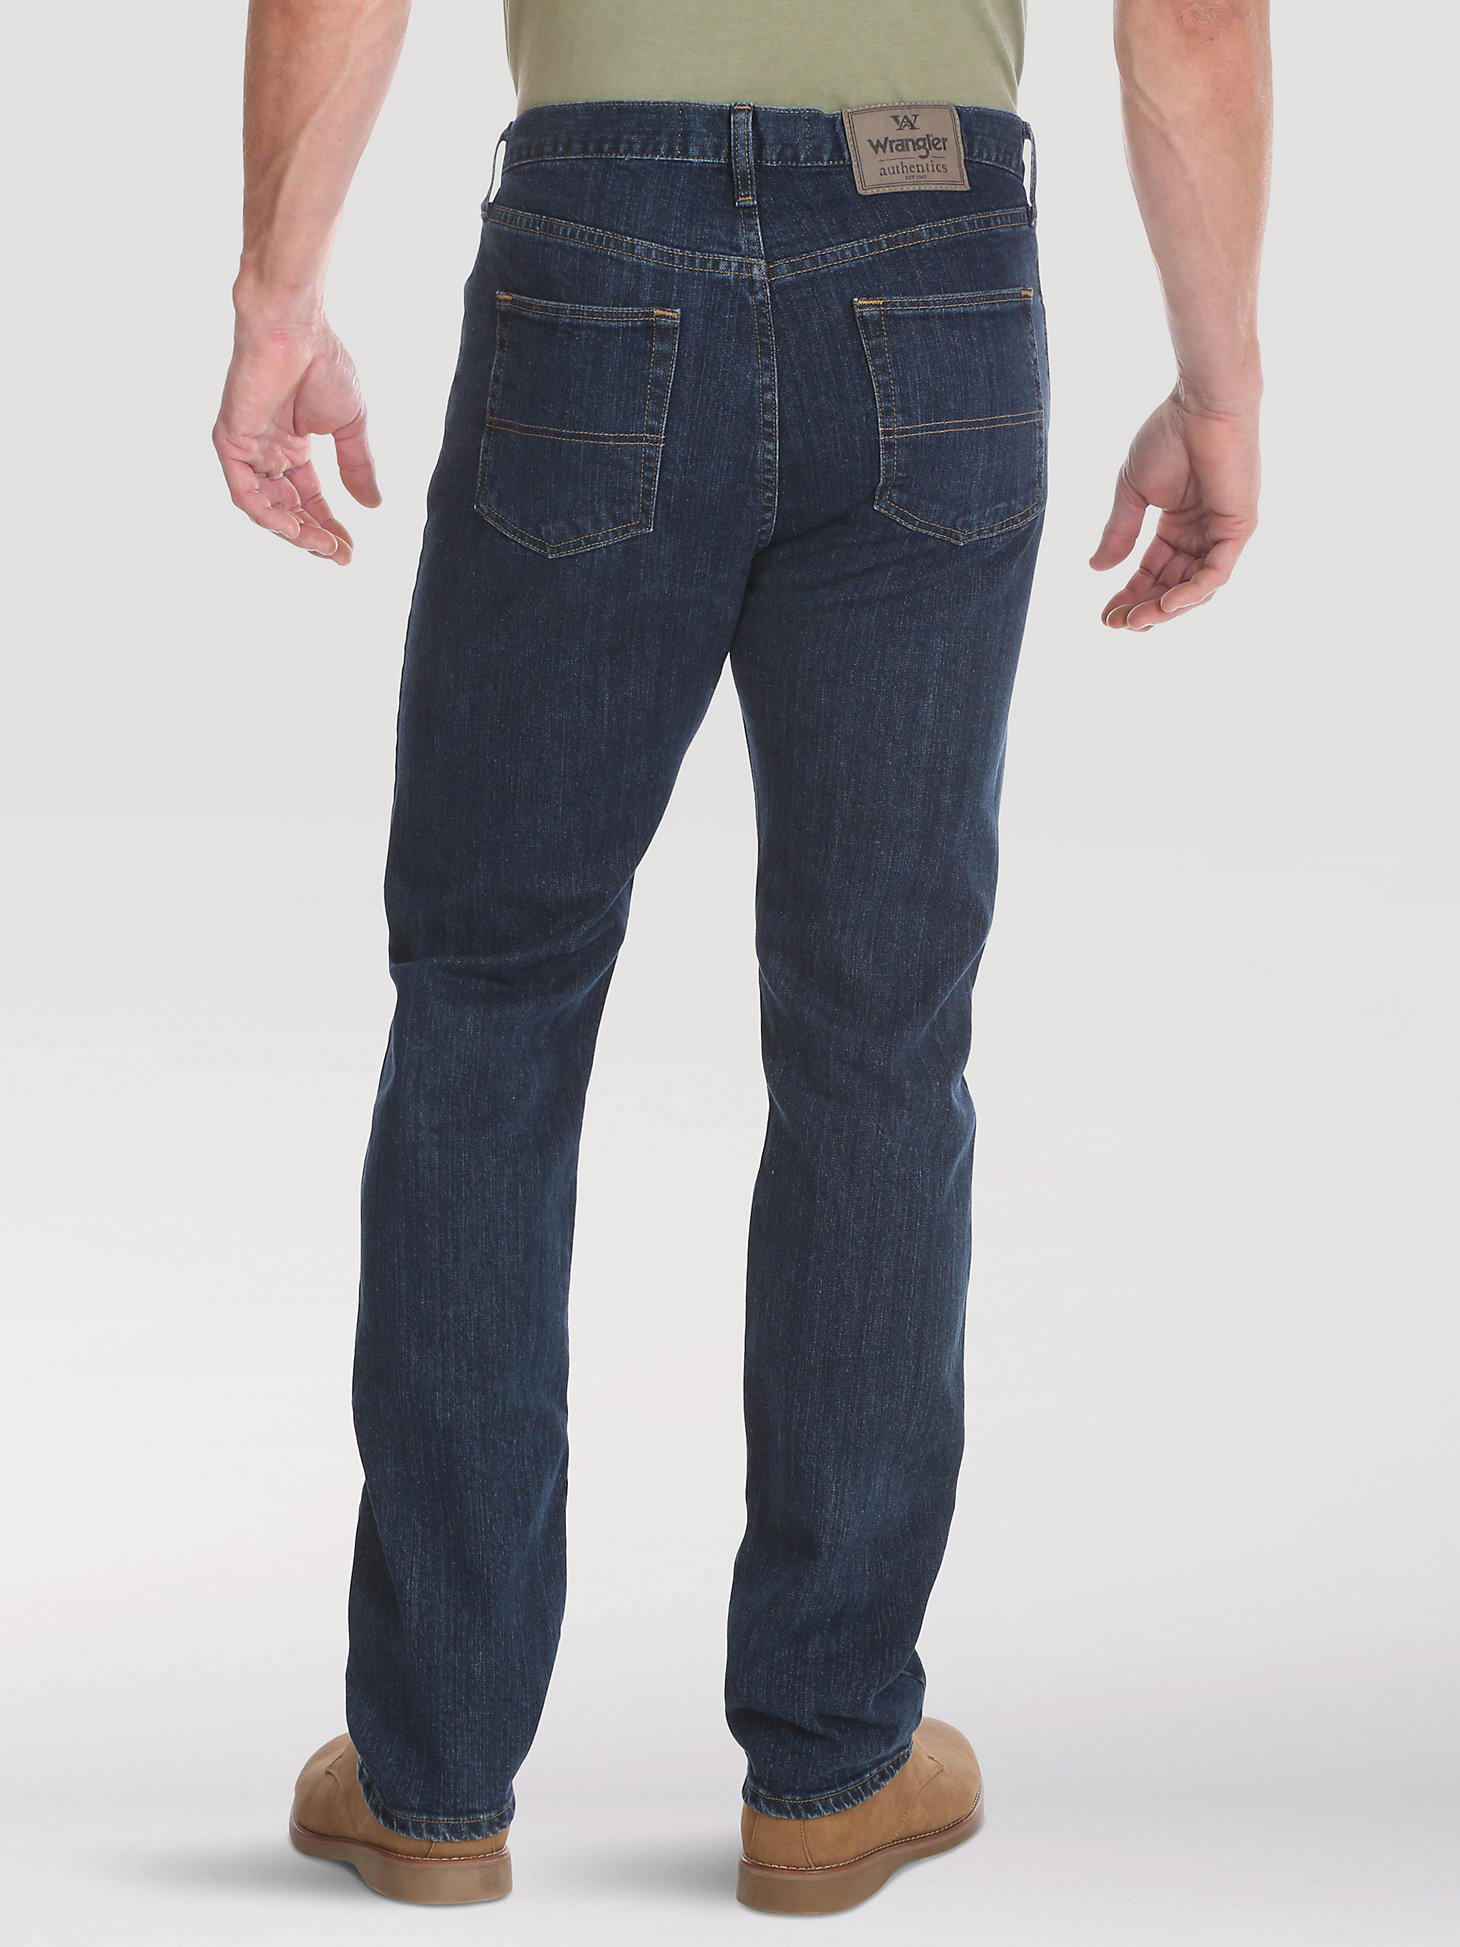 Men's Wrangler Authentics® Regular Fit Flex Jean in Indigo Dark alternative view 1